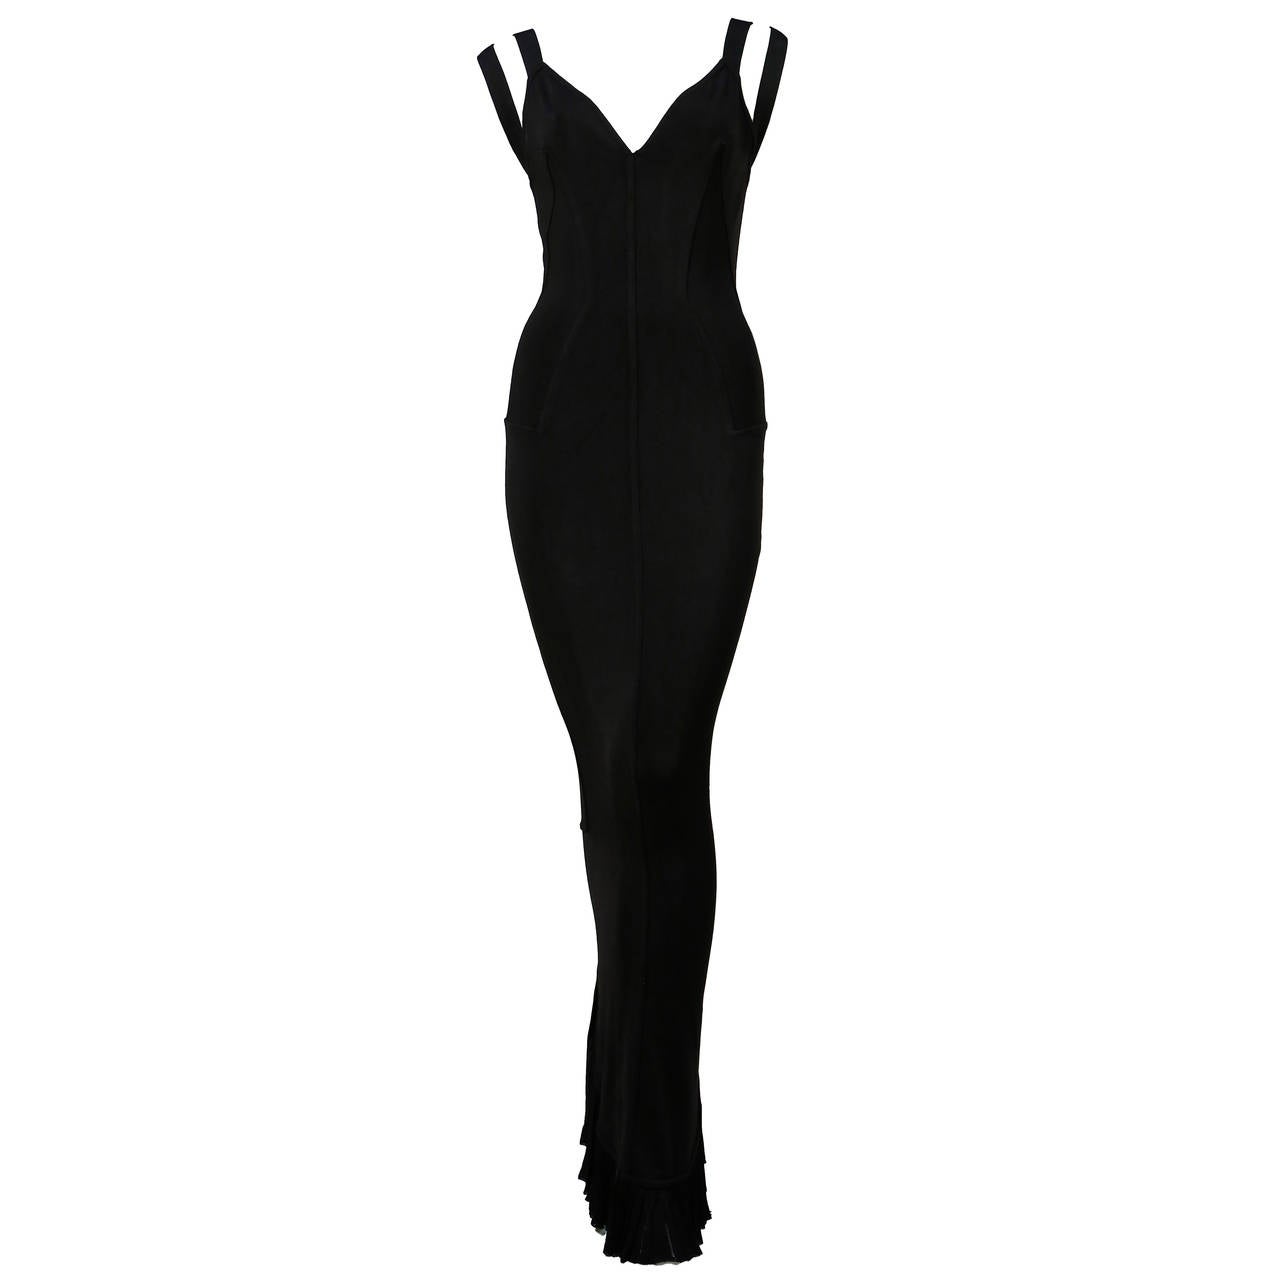 1990 AZZEDINE ALAIA long black dress with pleated fishtail hemline